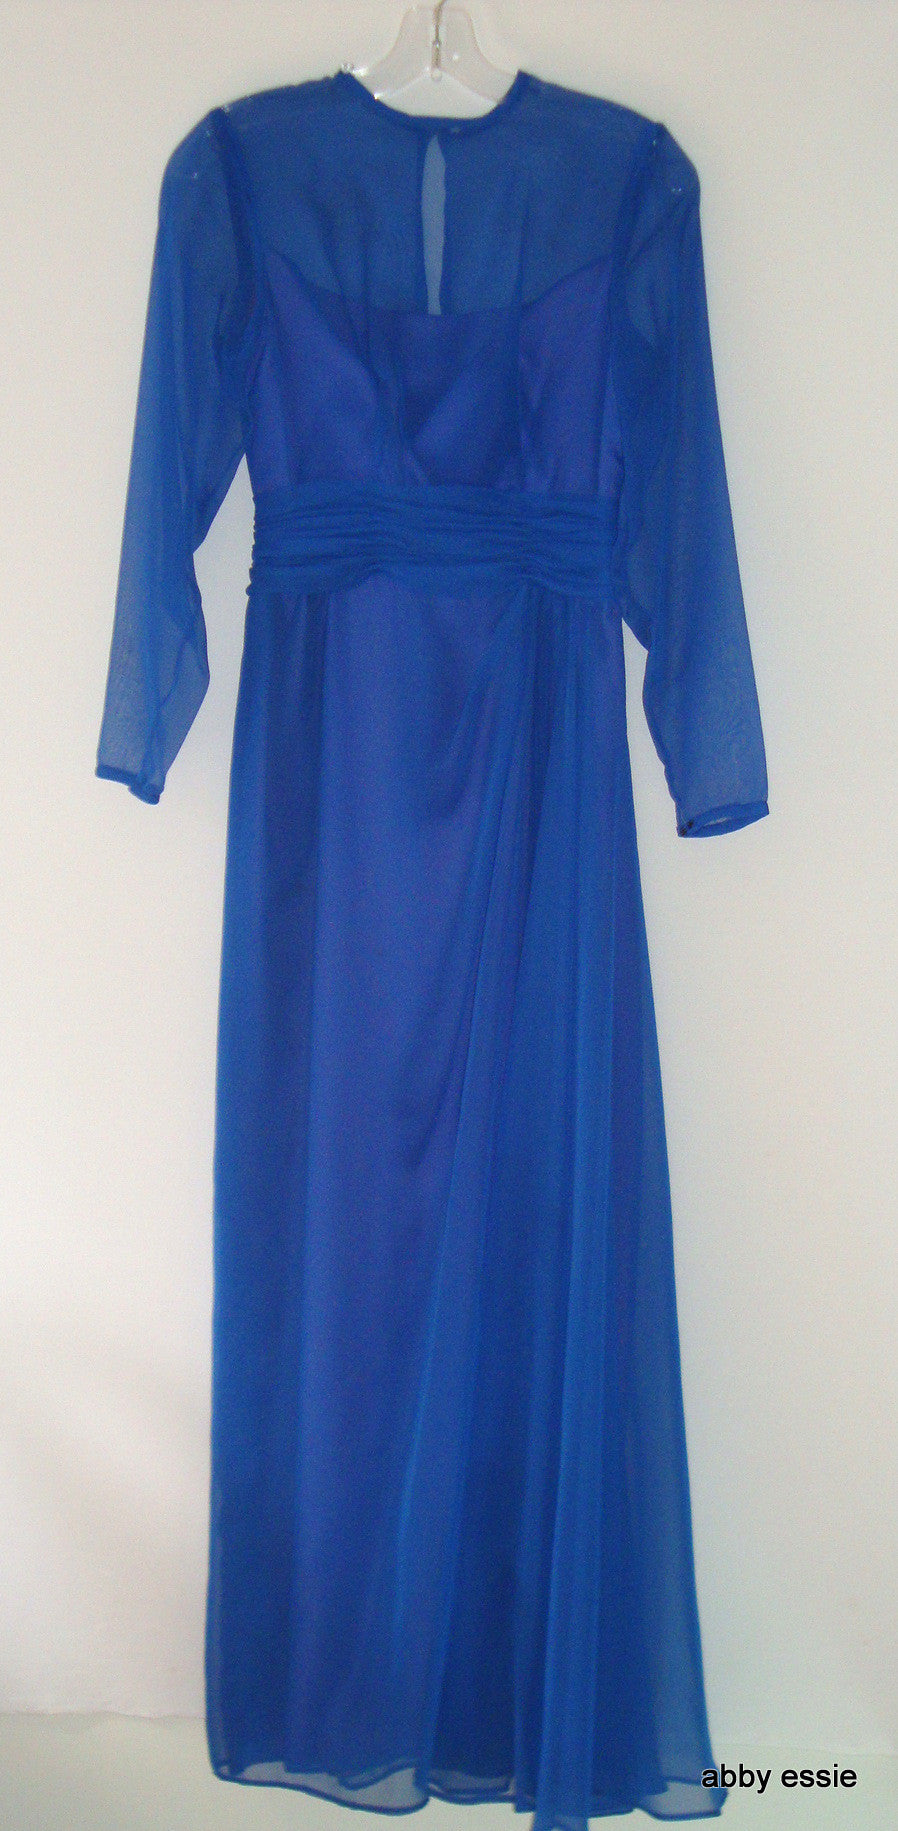 Vintage Alyce Designs Blue 50s 60s 70s Style Sheer Dress Sz 8 Ld-2722 Abby Essie